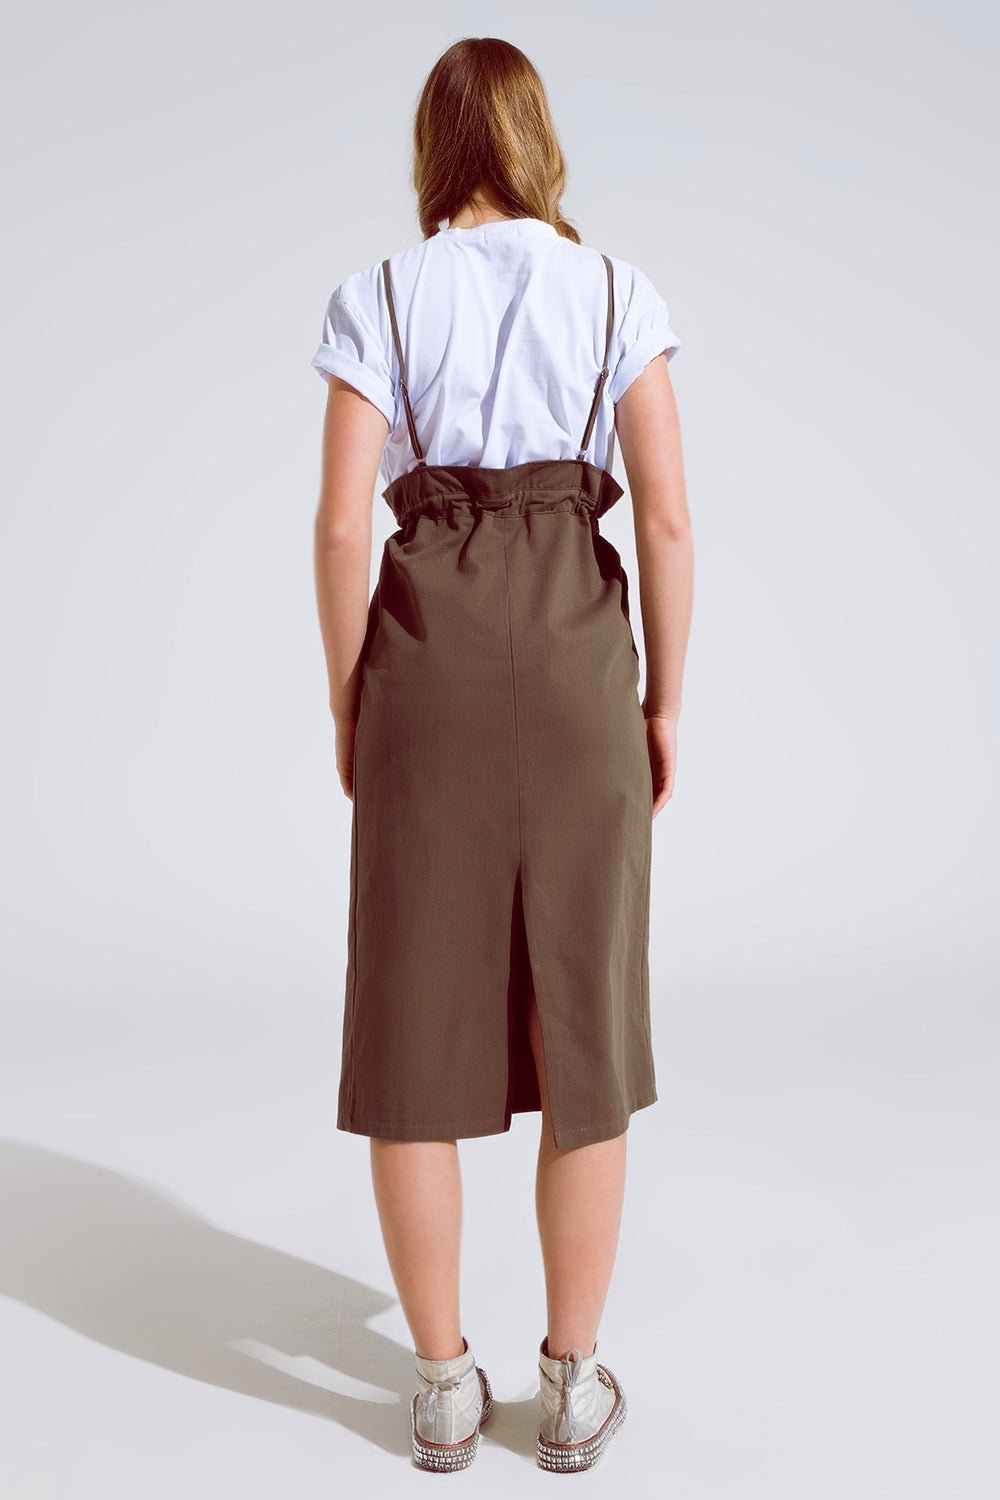 Khaki Denim Overall Dress With Chest Pocket and Drawstring Waist - Mack & Harvie